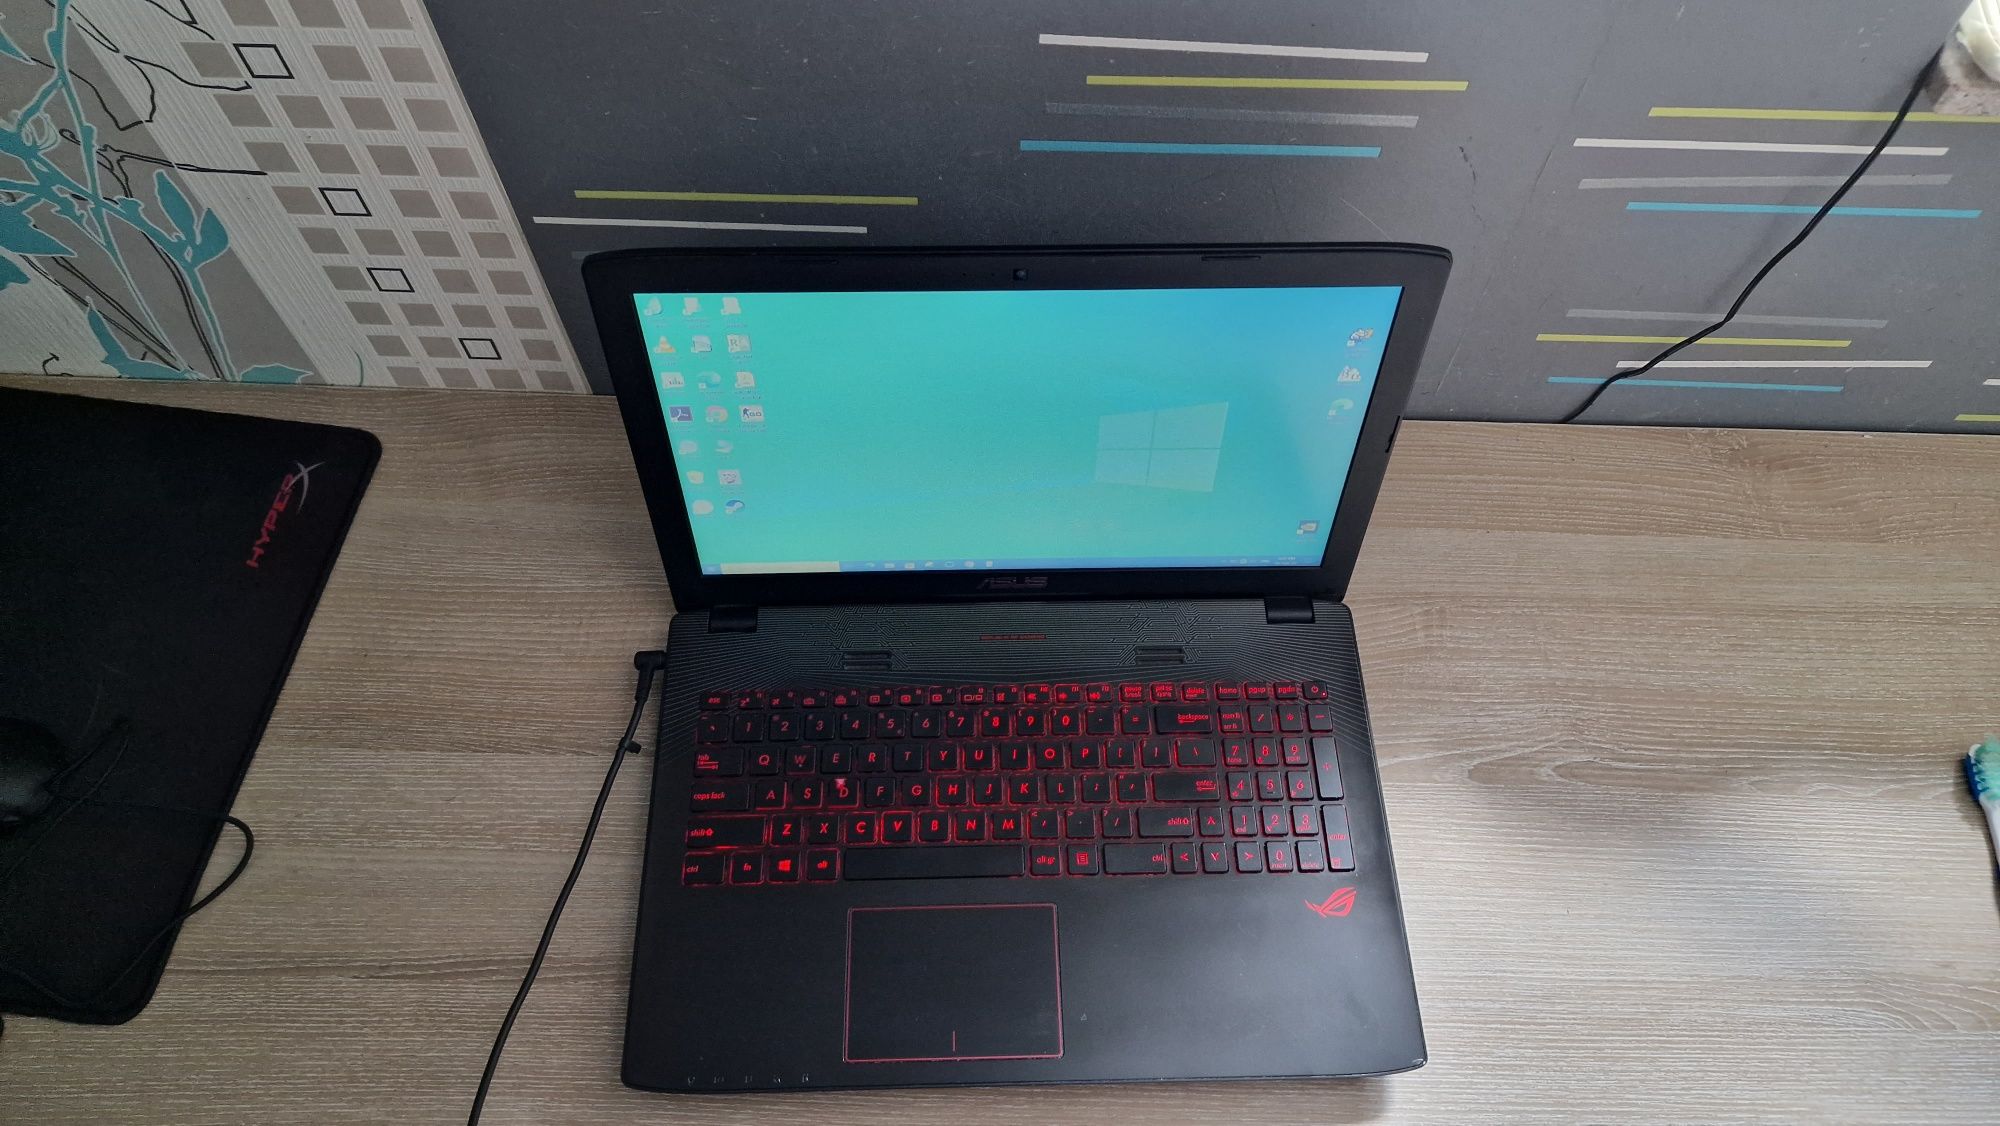 Laptop Gaming Asus ROG Intel® Core™ i7-4720HQ